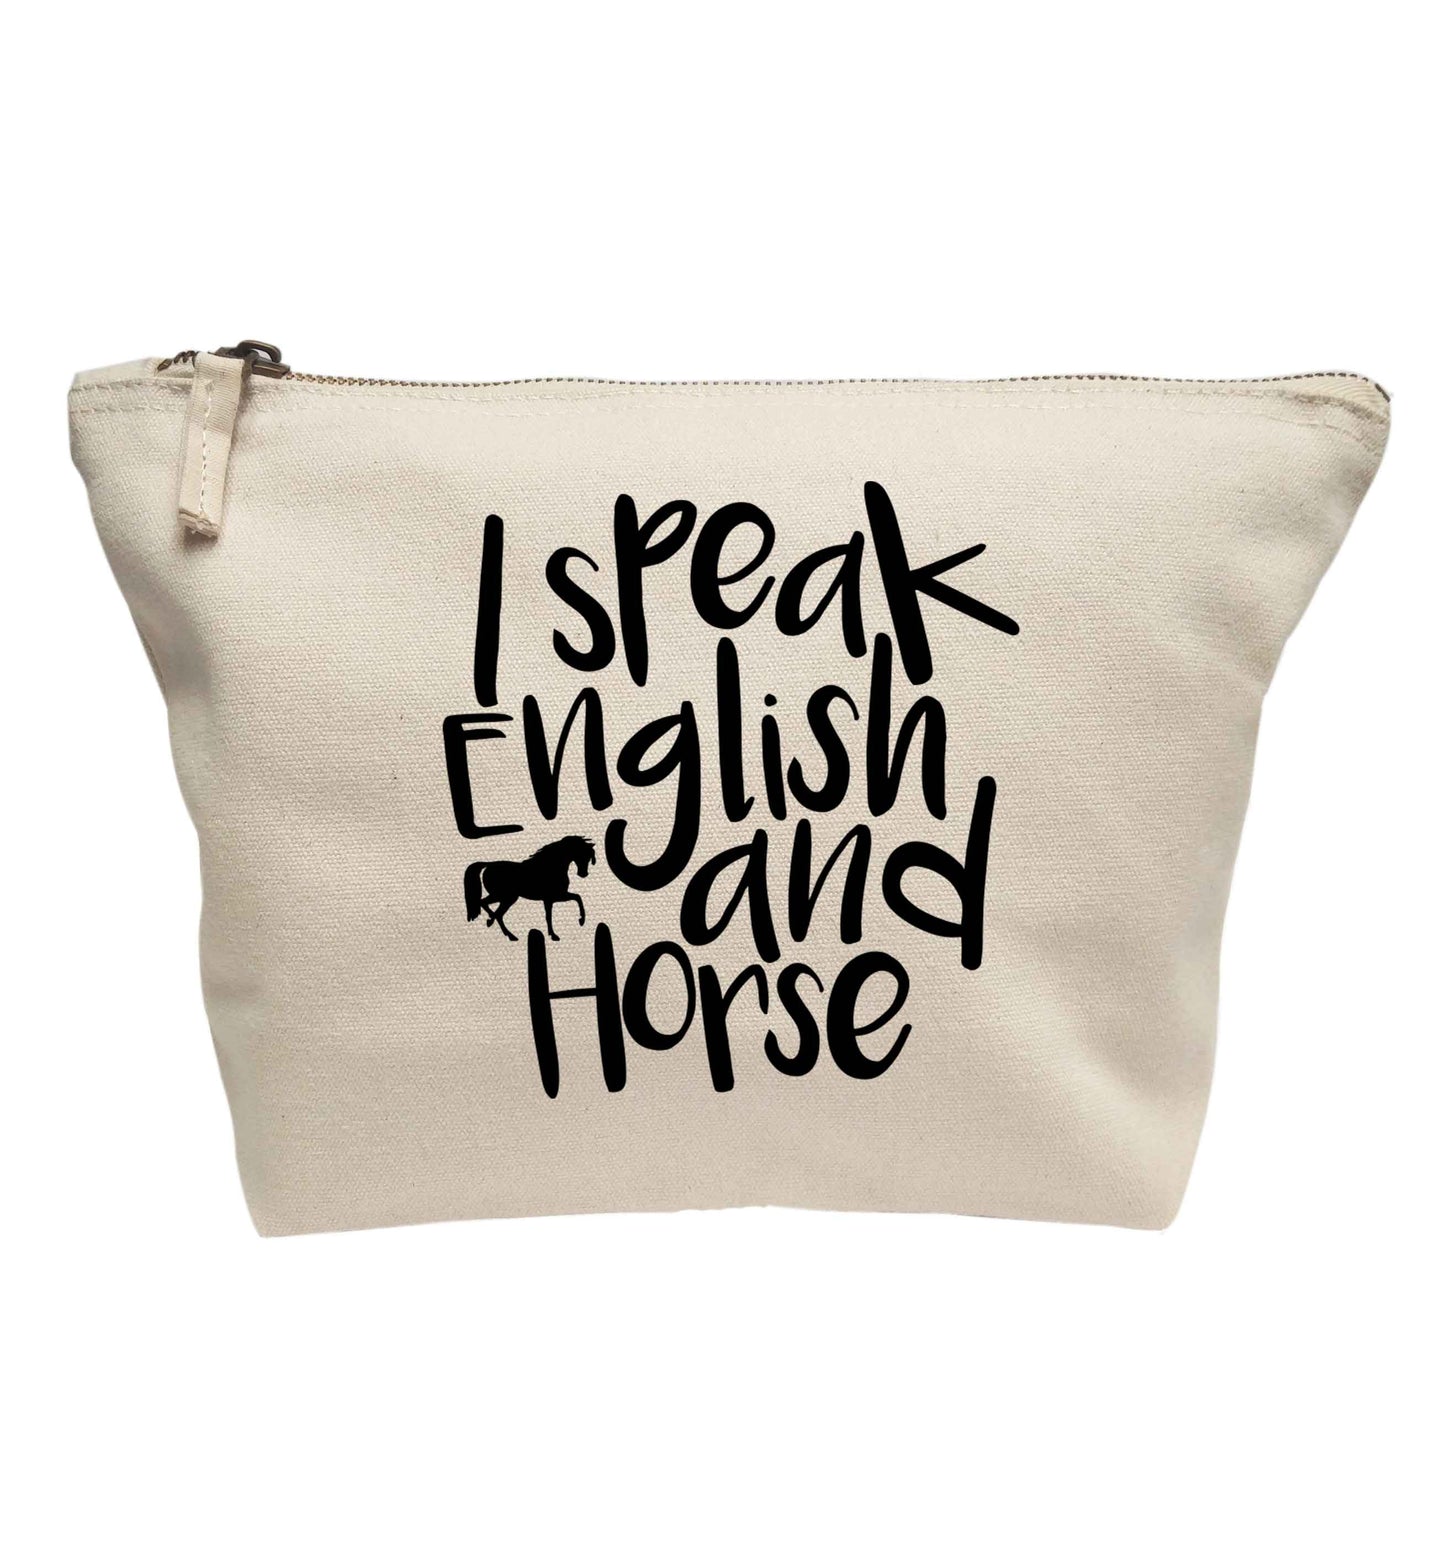 I speak English and horse | Makeup / wash bag